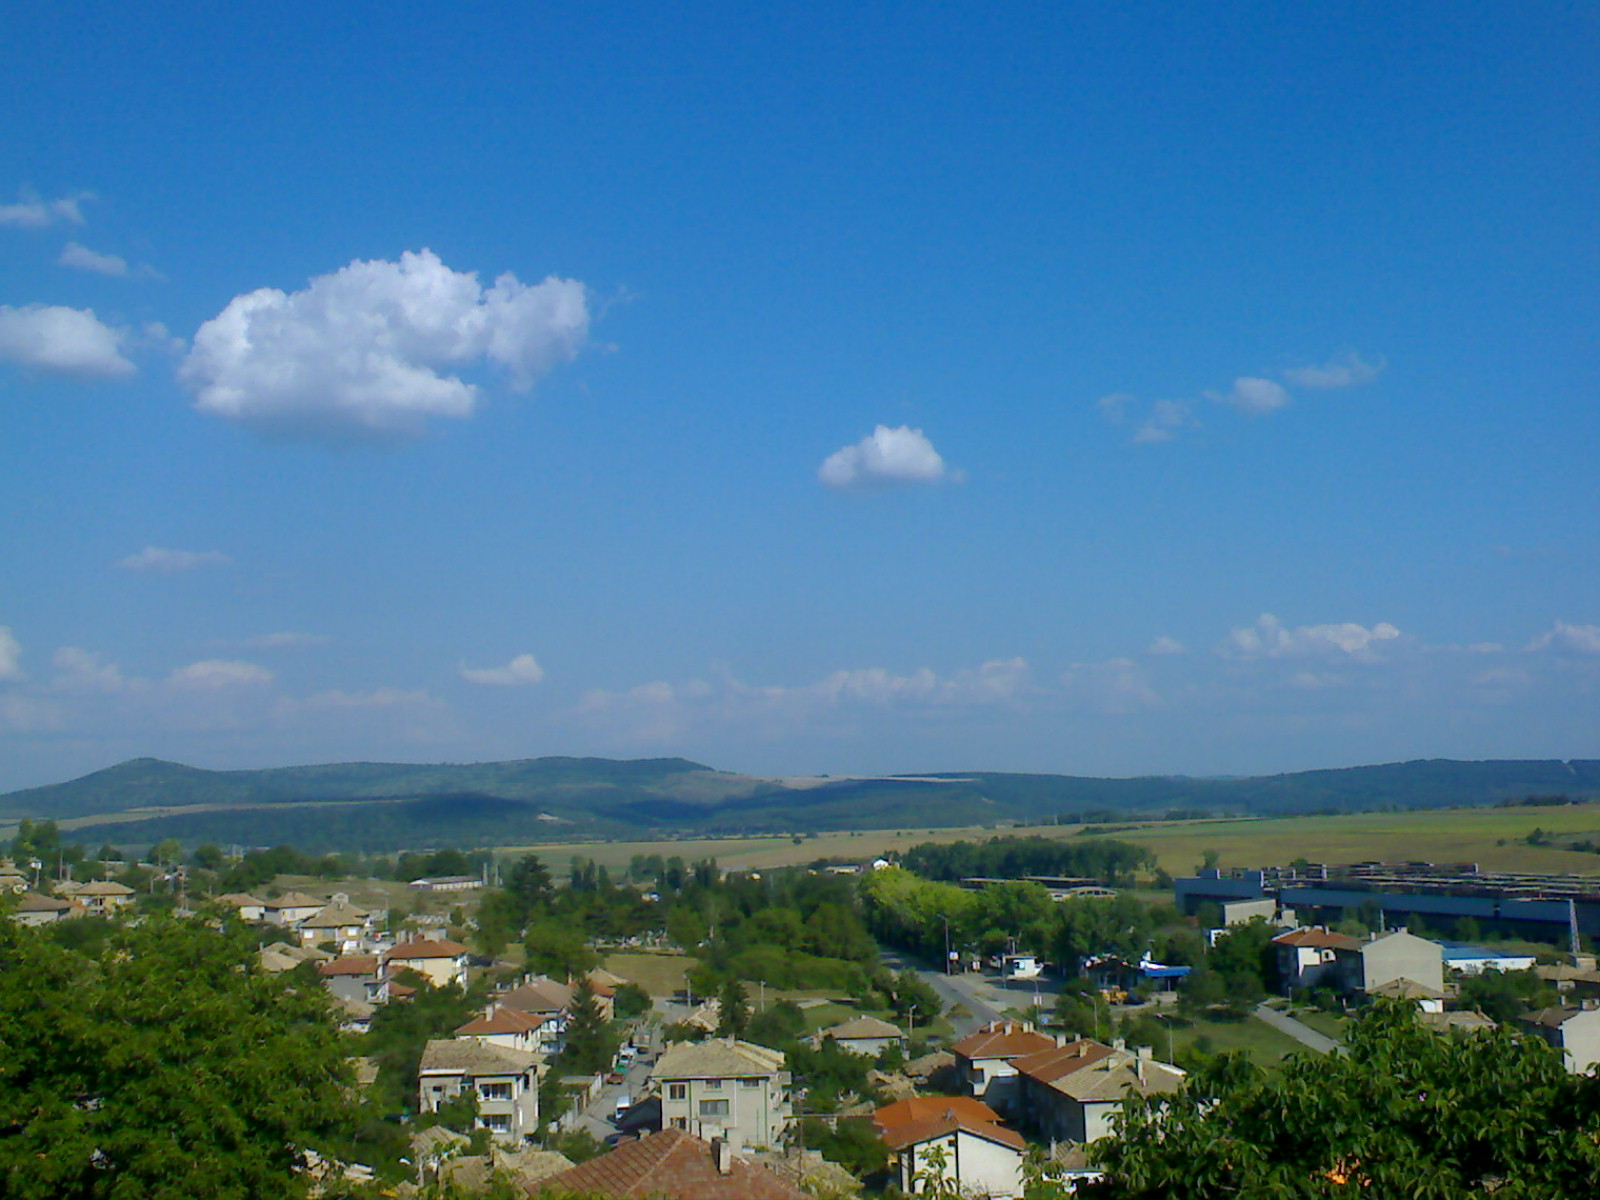 Popovo region